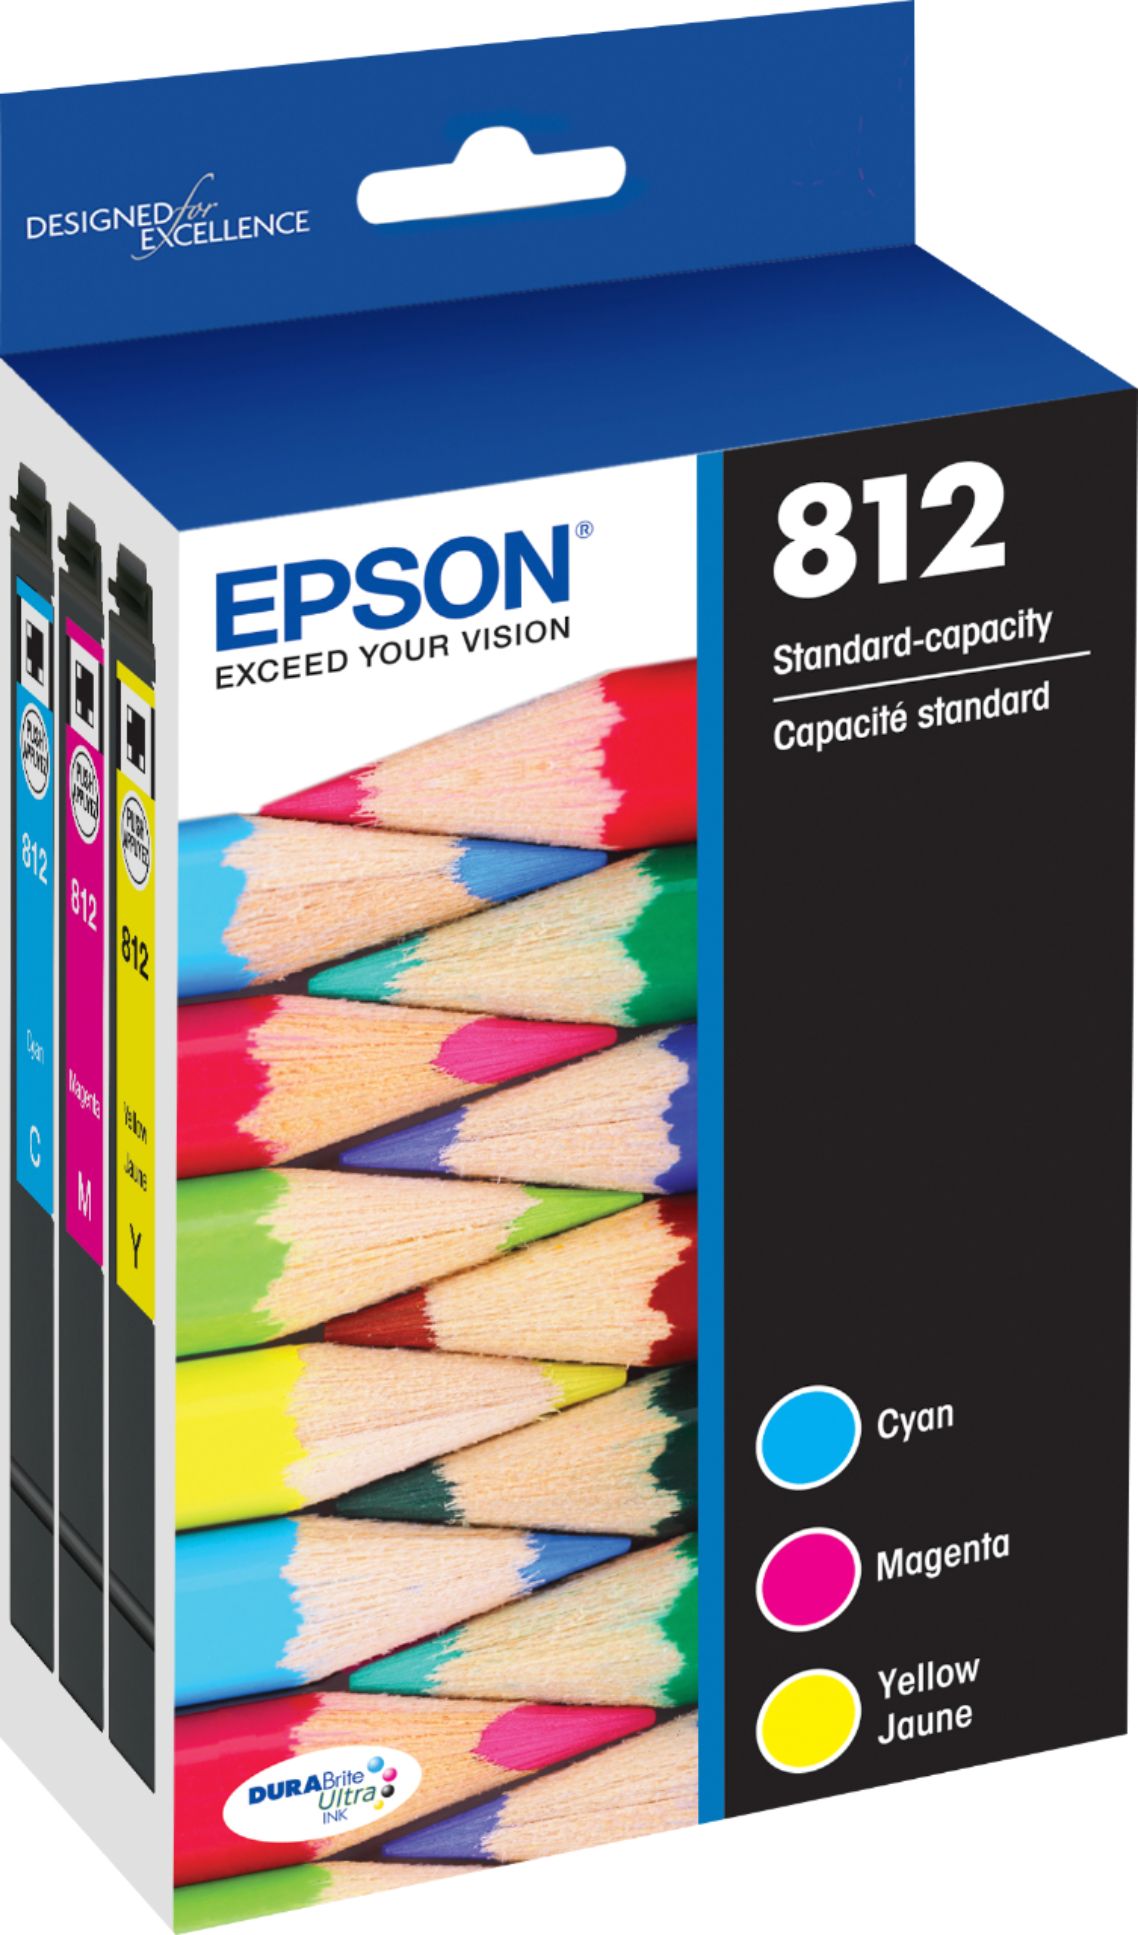 Epson - Paper - Bright White